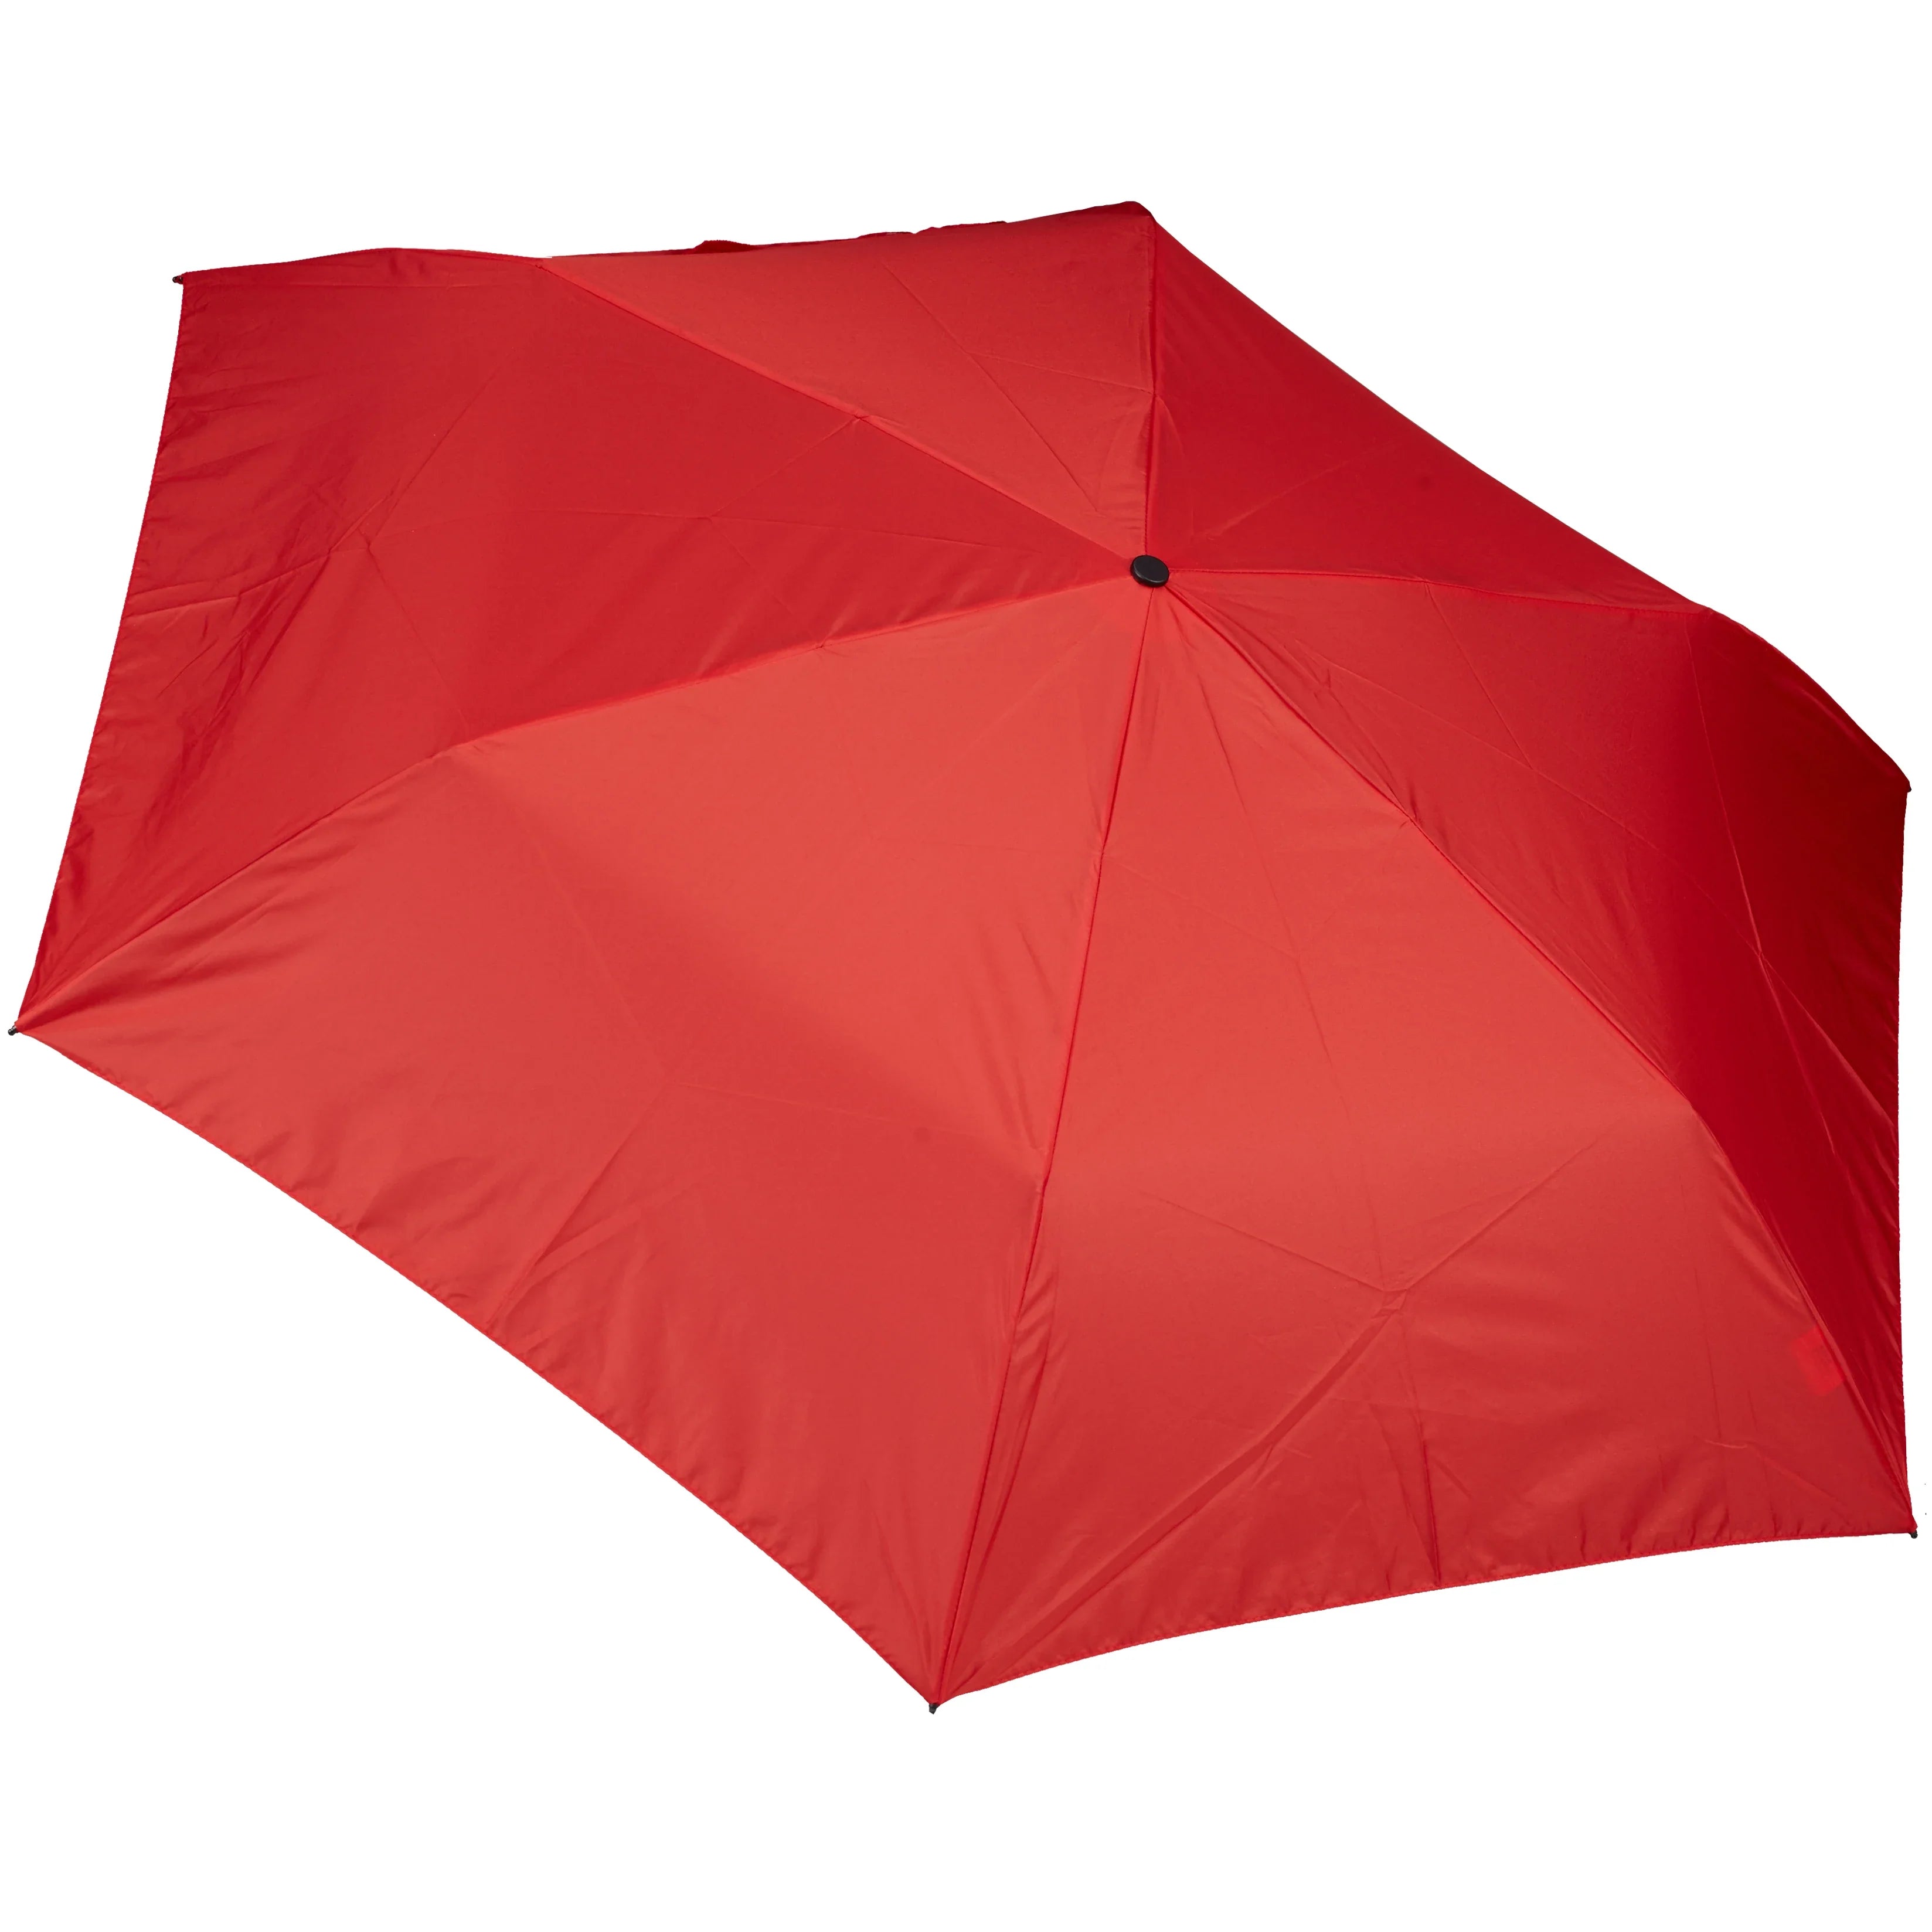 Doppler Zero99 umbrella cm - umbrellas black pocket 21 pocket